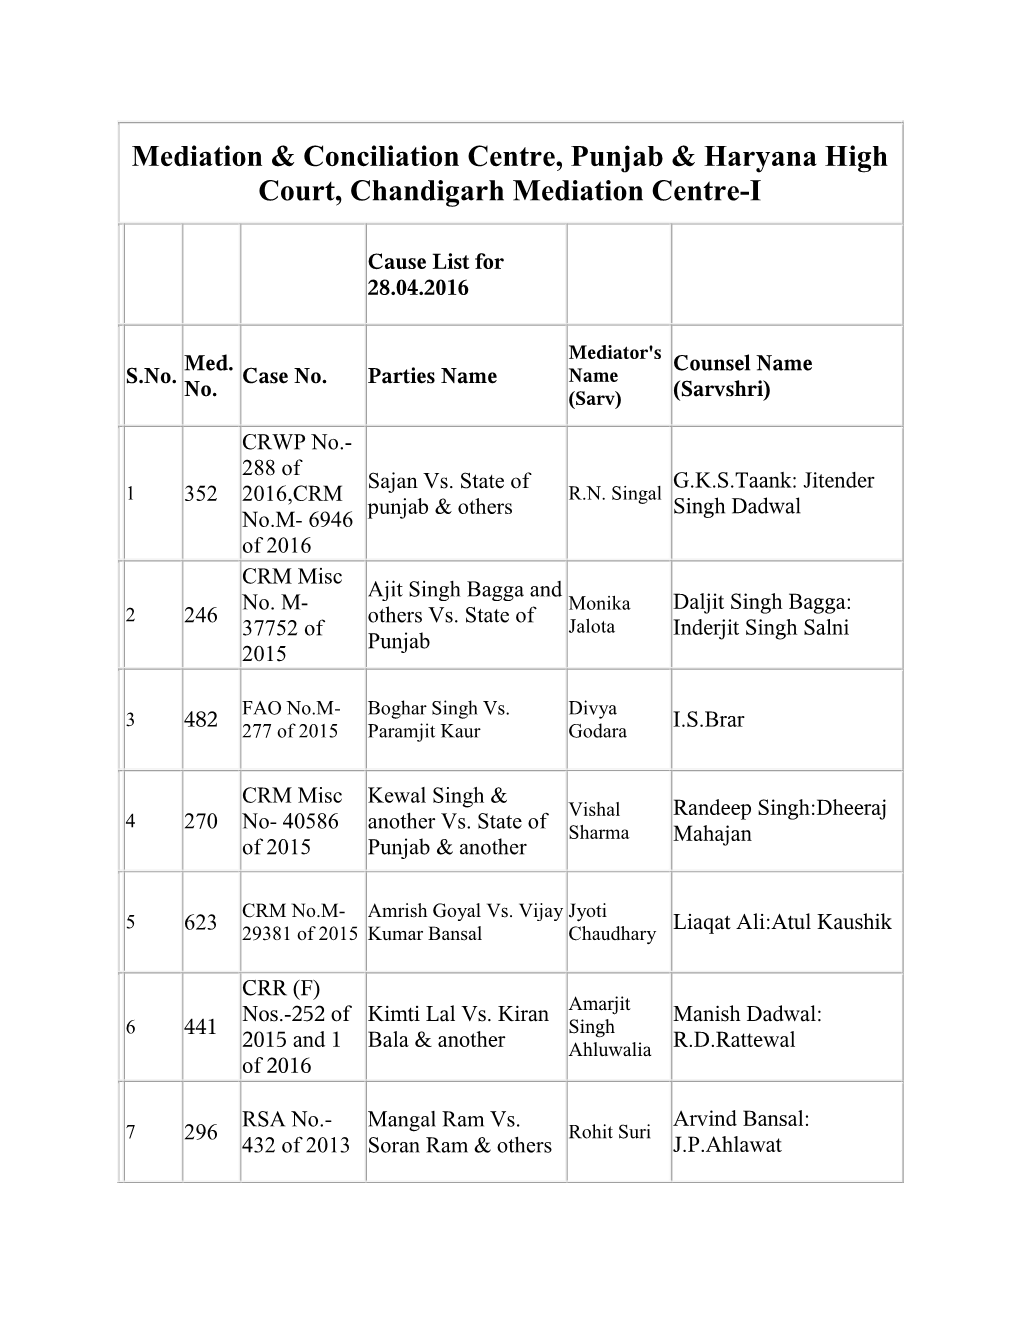 Mediation & Conciliation Centre, Punjab & Haryana High Court, Chandigarh Mediation Centre-I